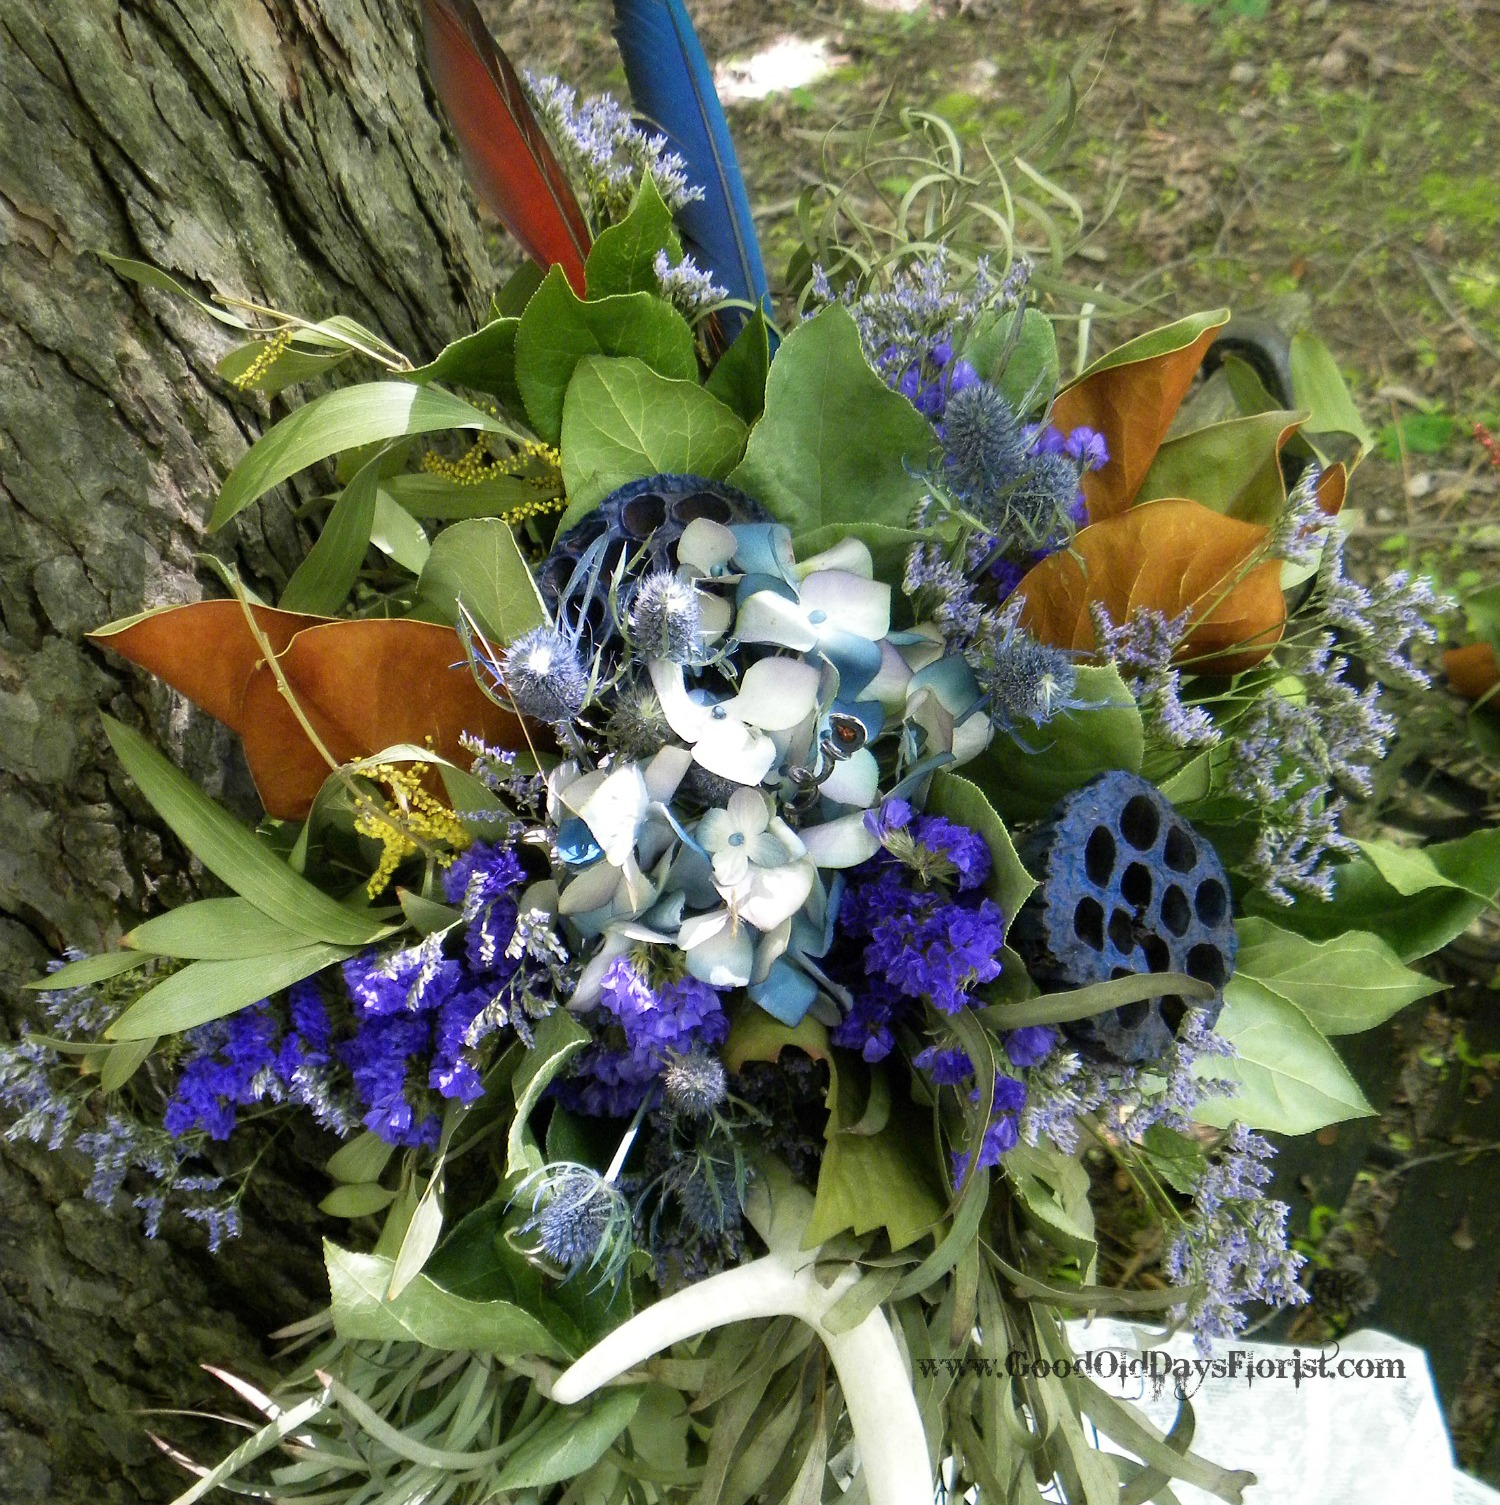 Dried Flower Bouquet Blue - Good Old Days Florist - The Eco Florist